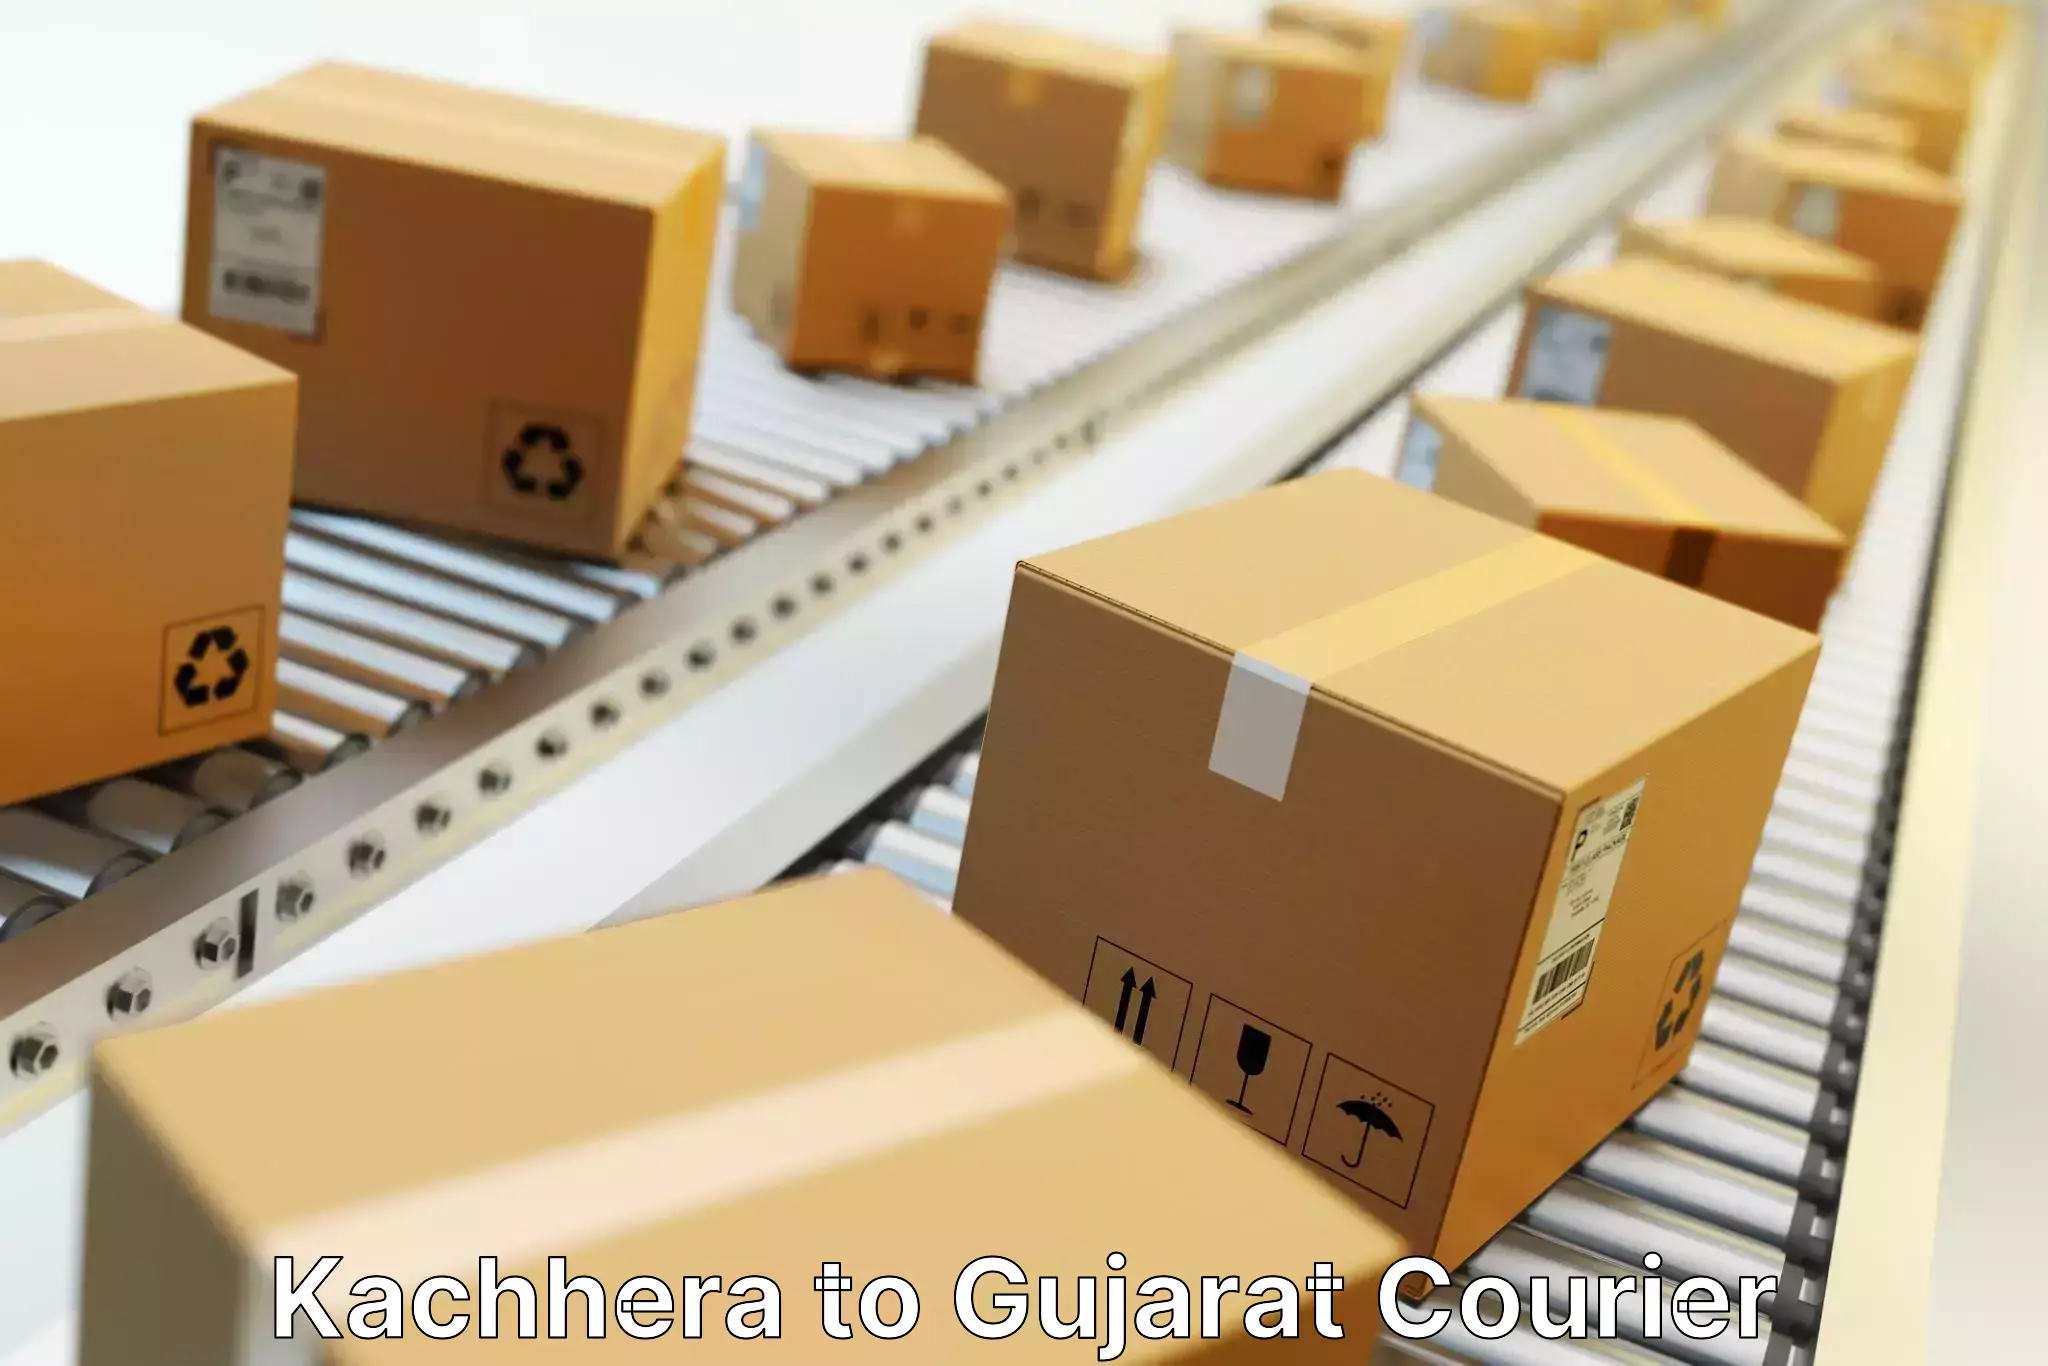 Cargo delivery service Kachhera to Gujarat